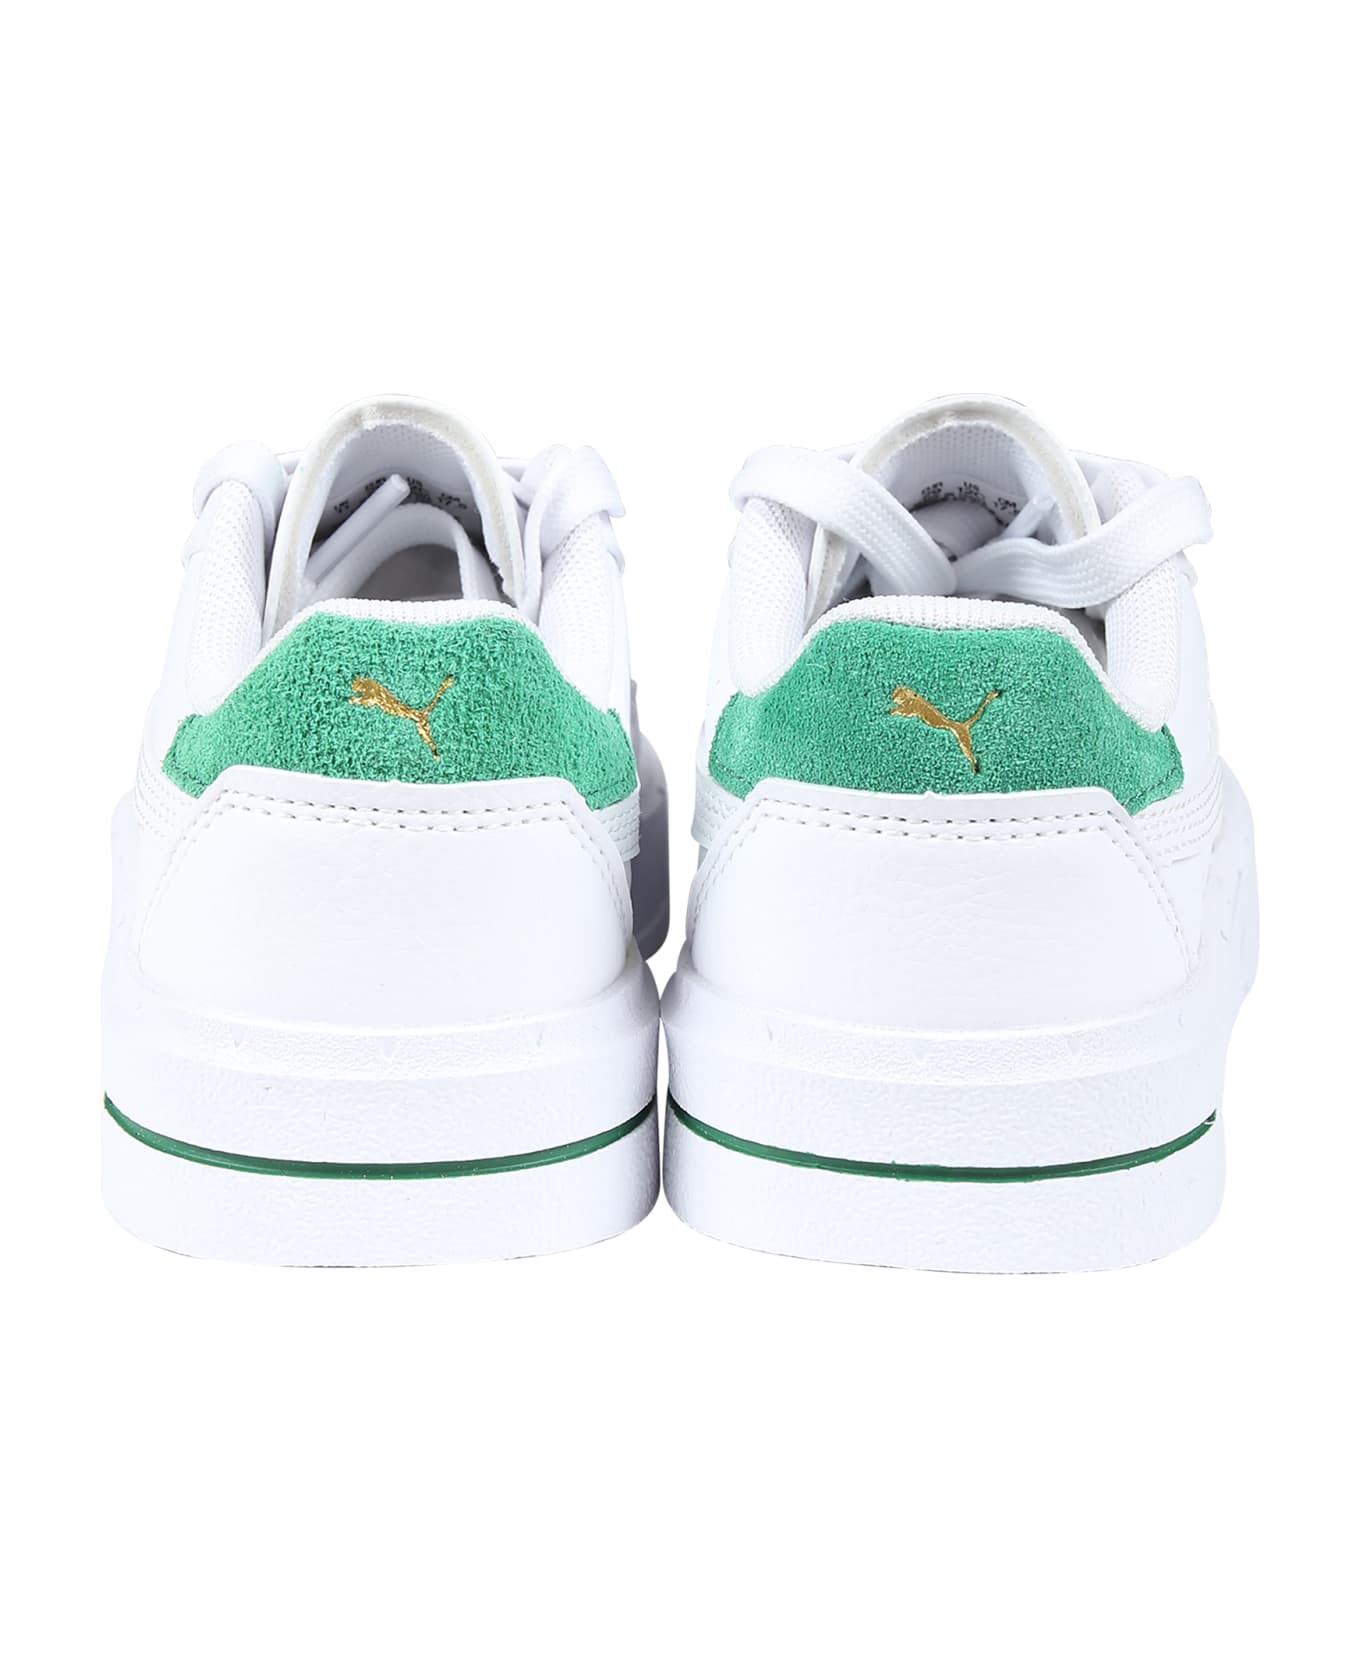 Puma White Sneakers For Kids - White